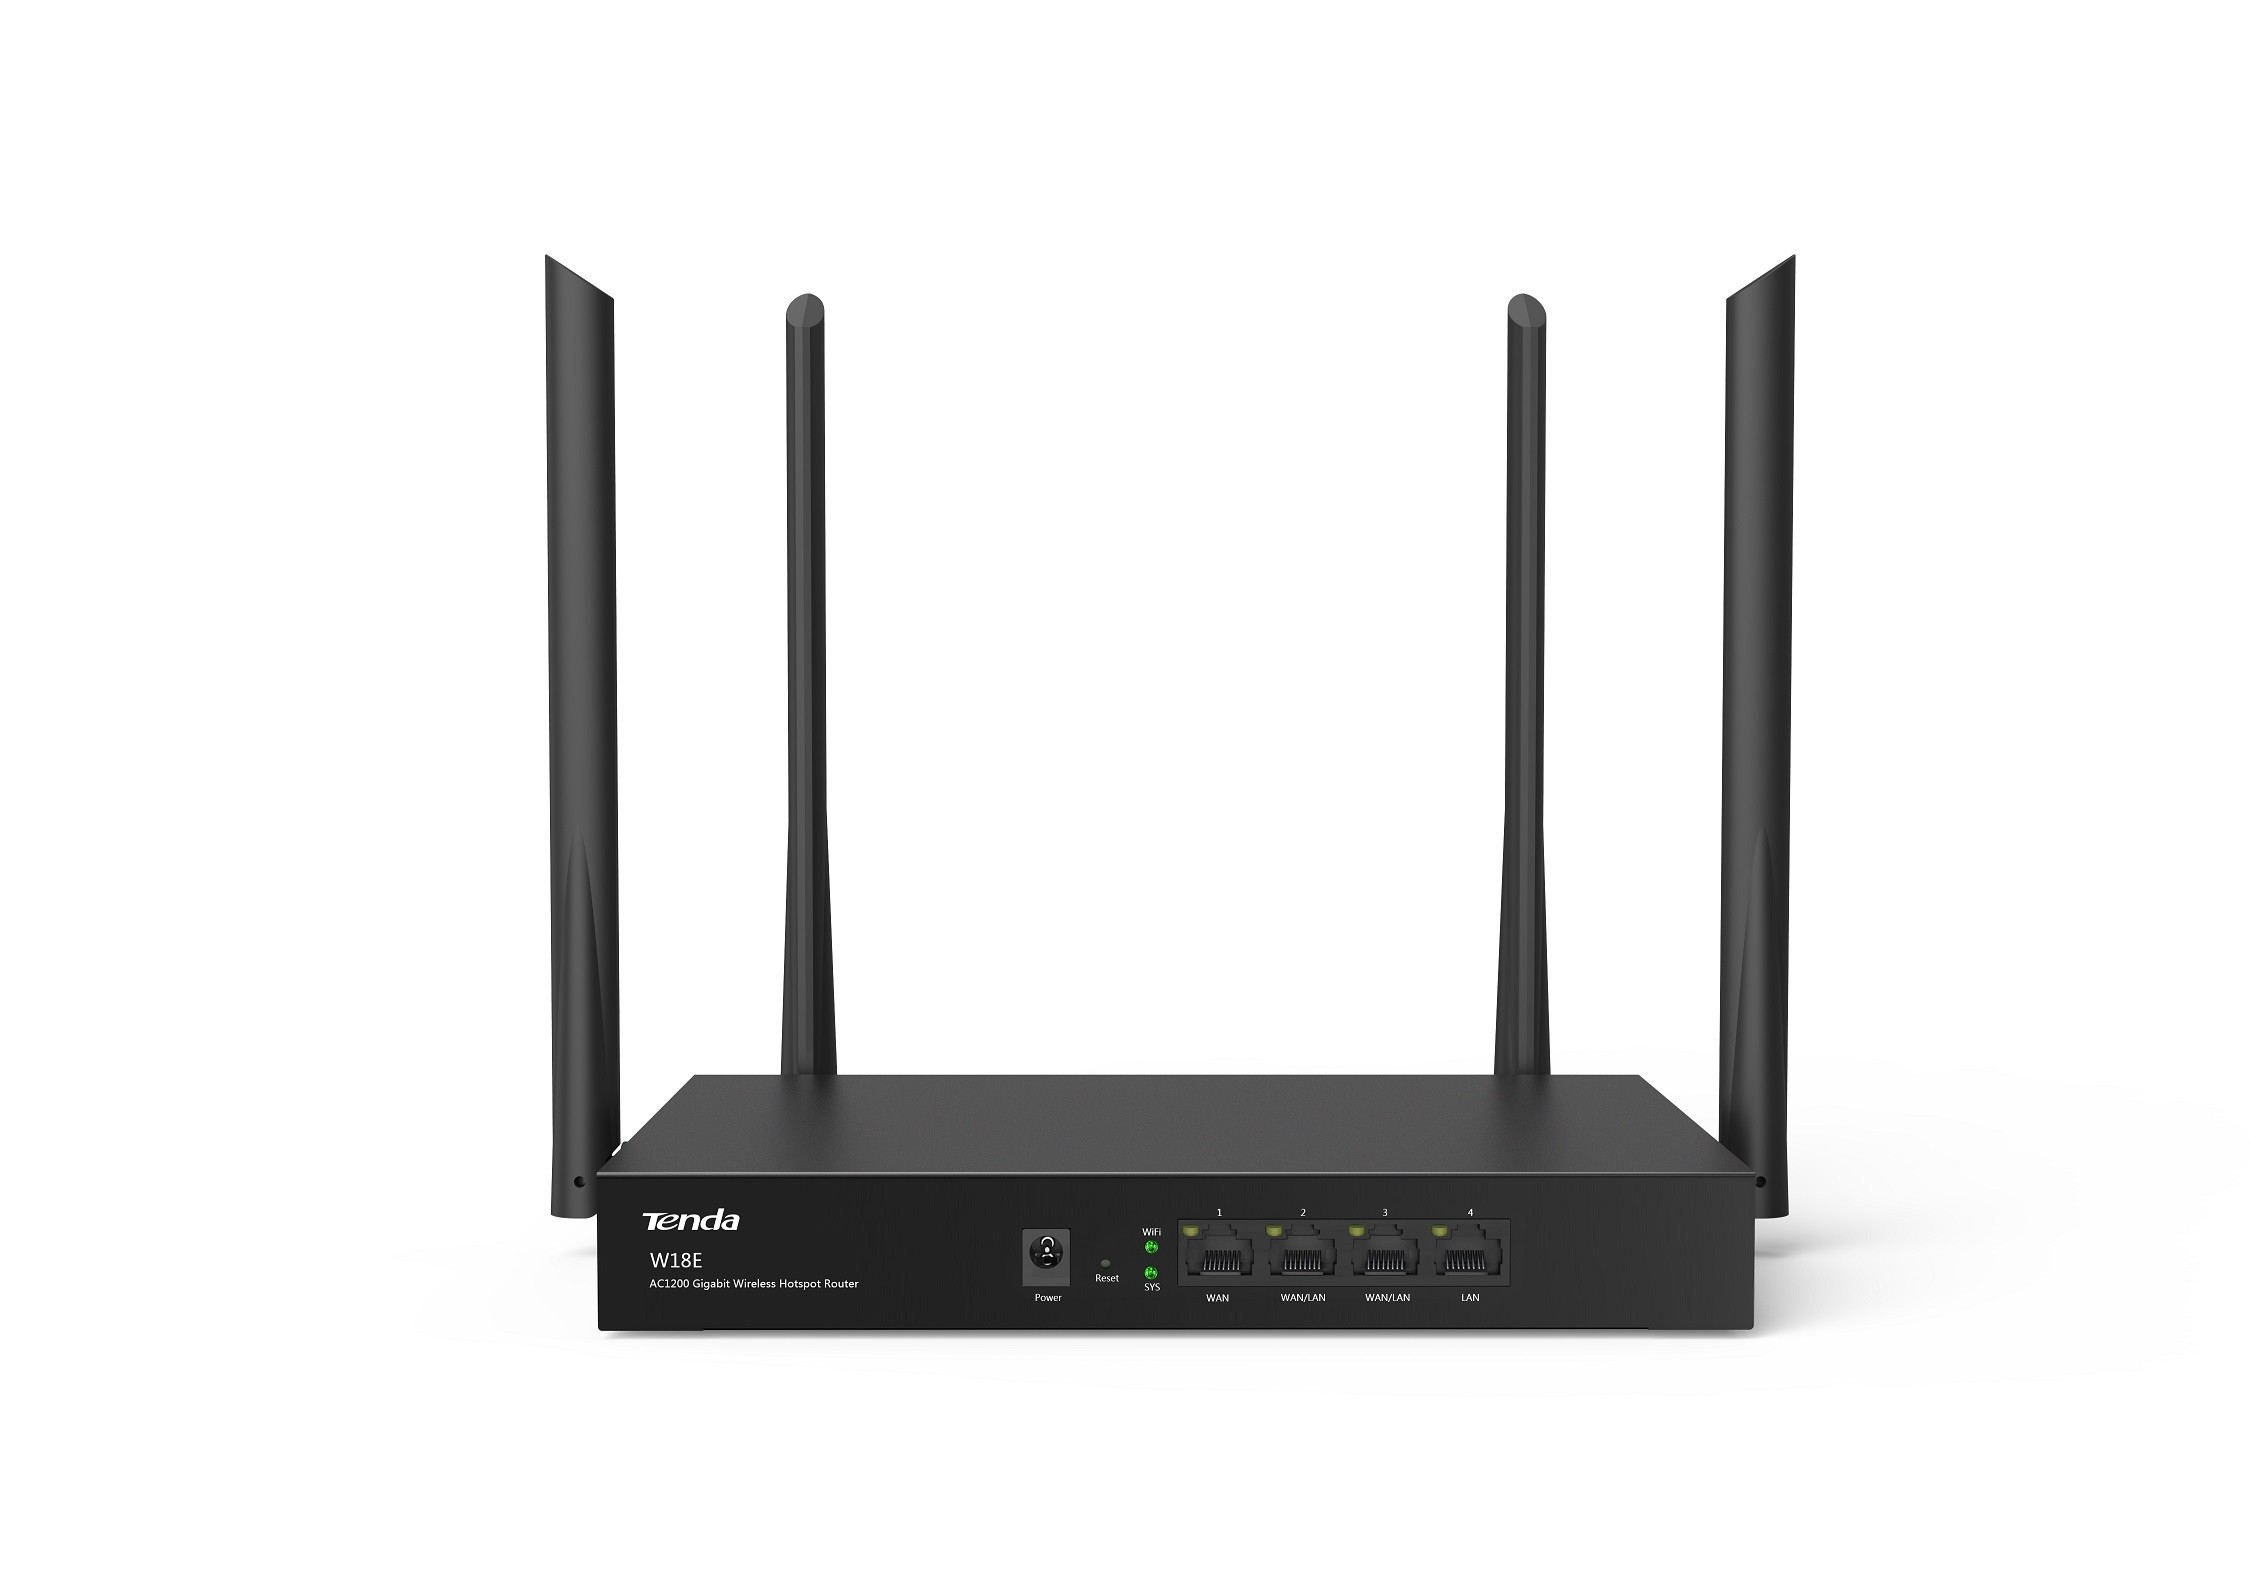 router wireless hotspot tenda w18e, ac1200 dual band gigabit